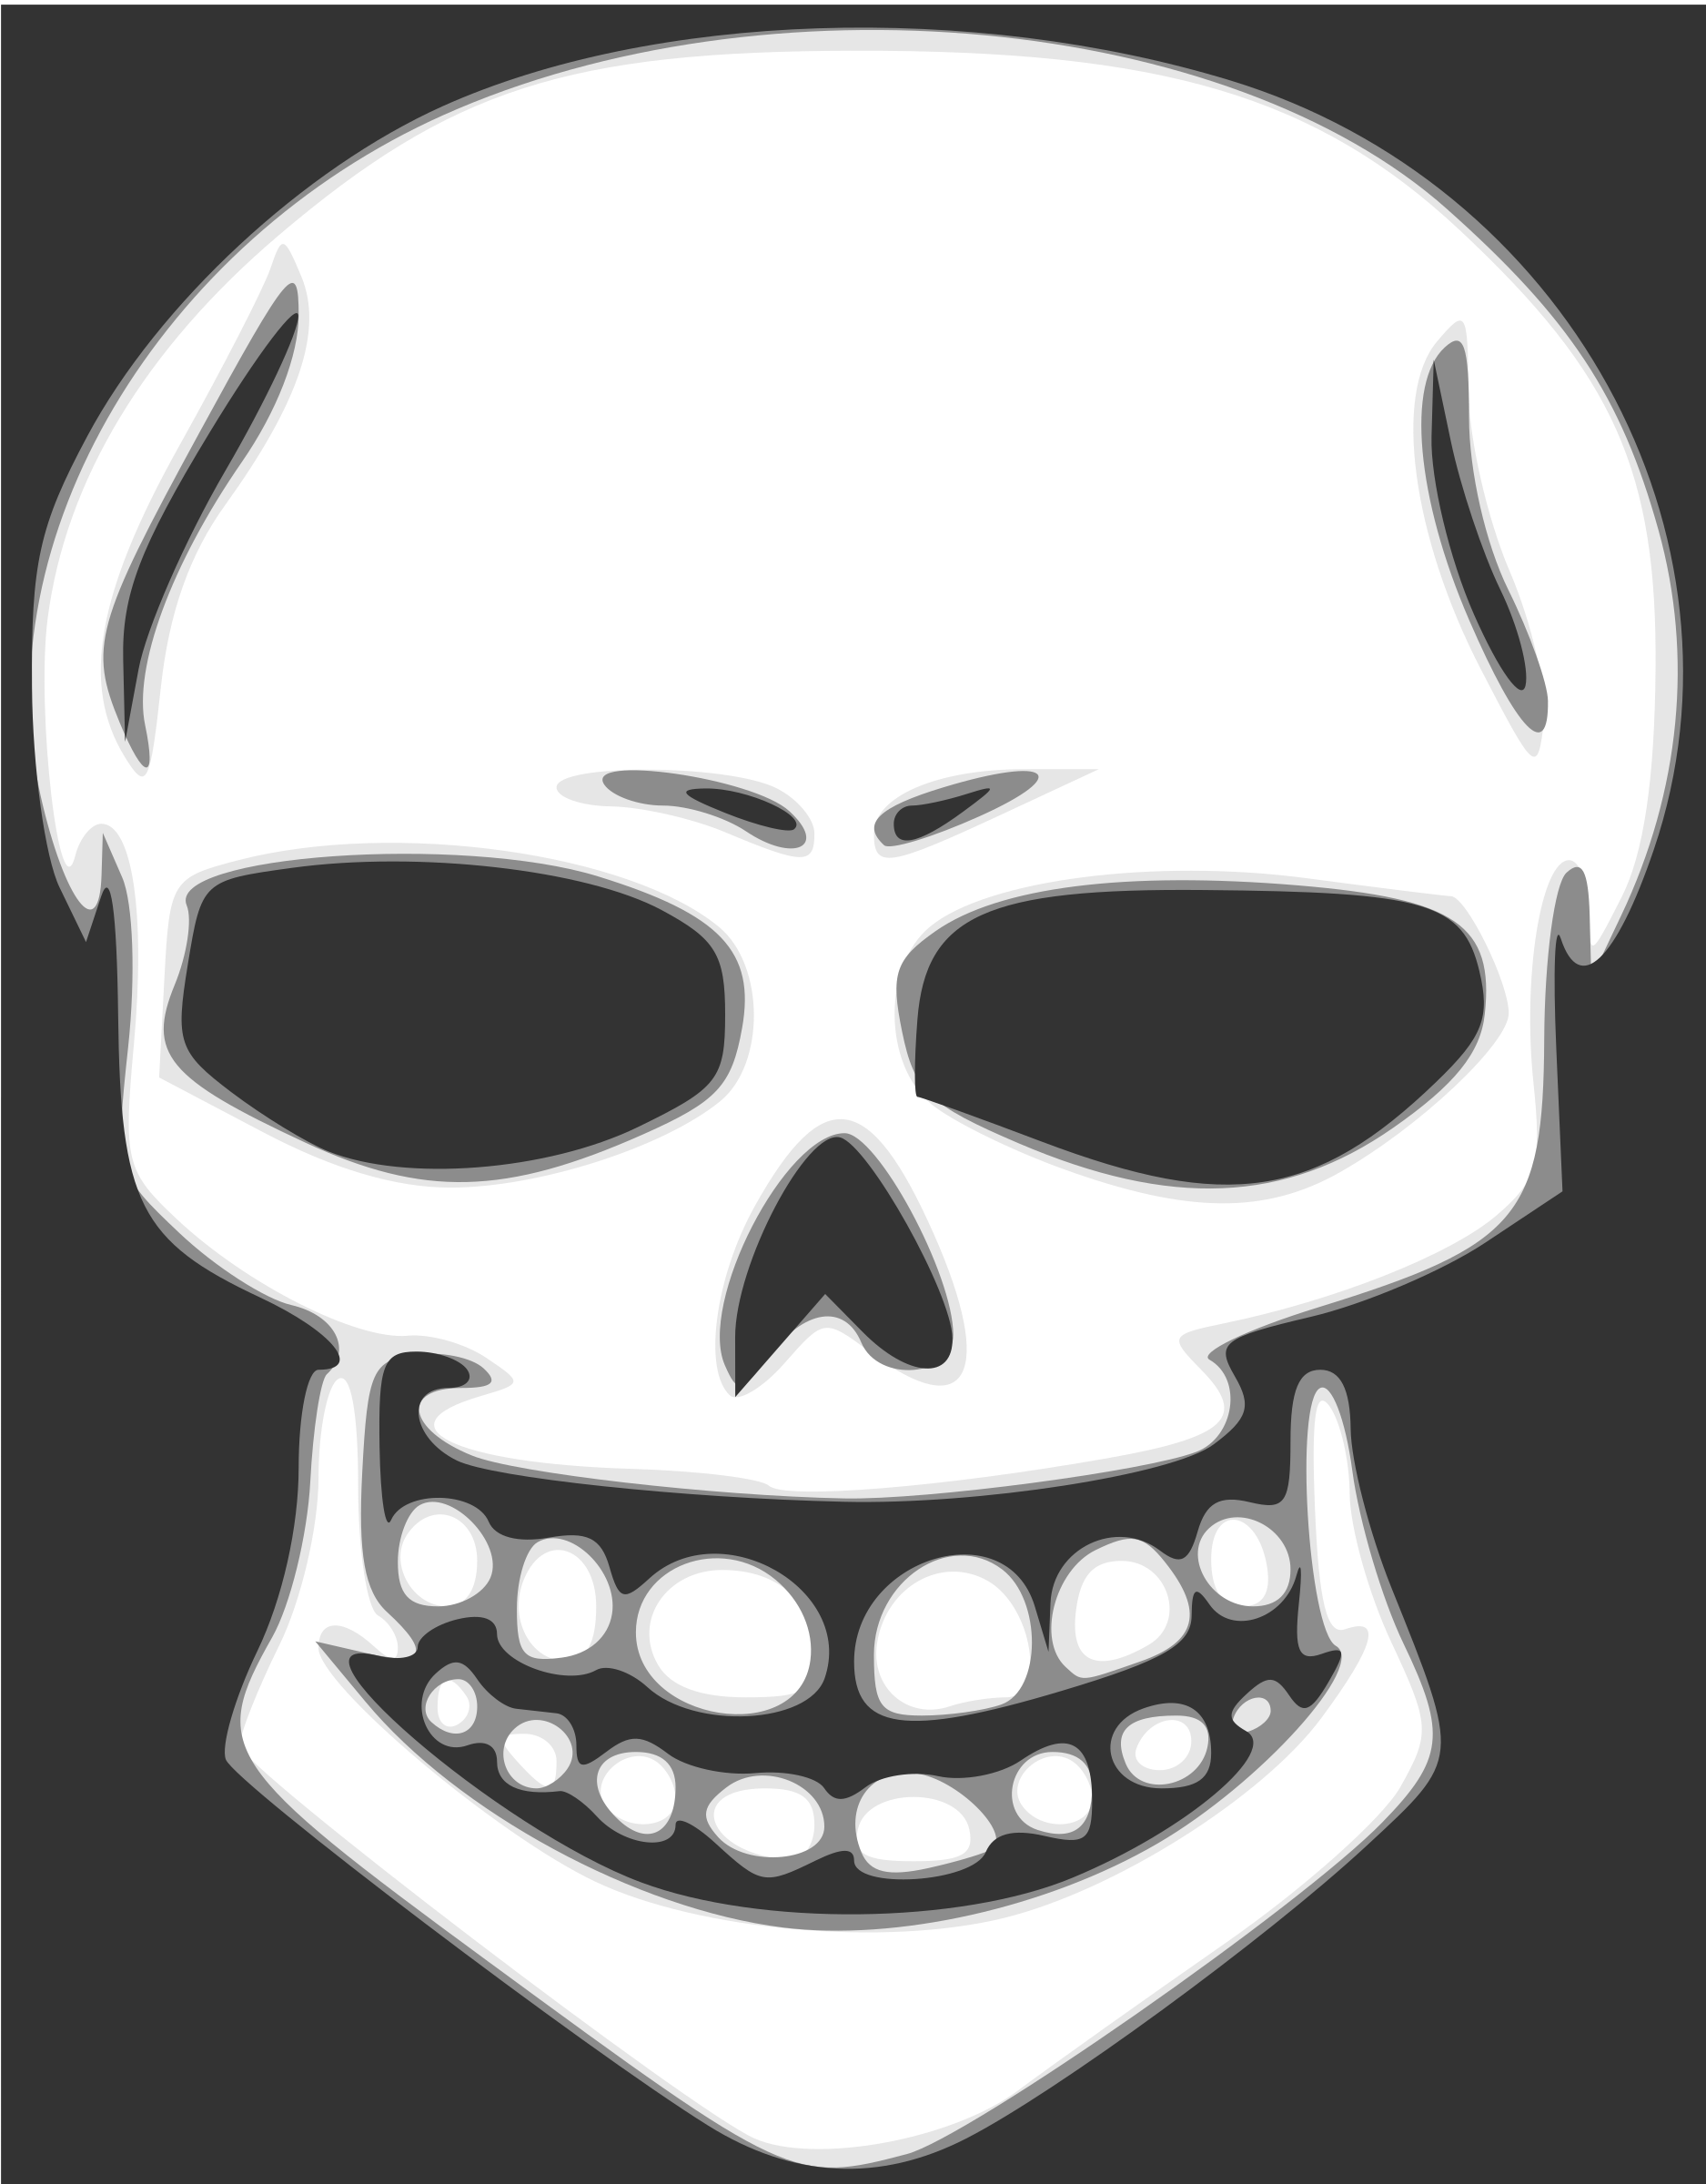 Xray clipart black and white. Skull human x ray